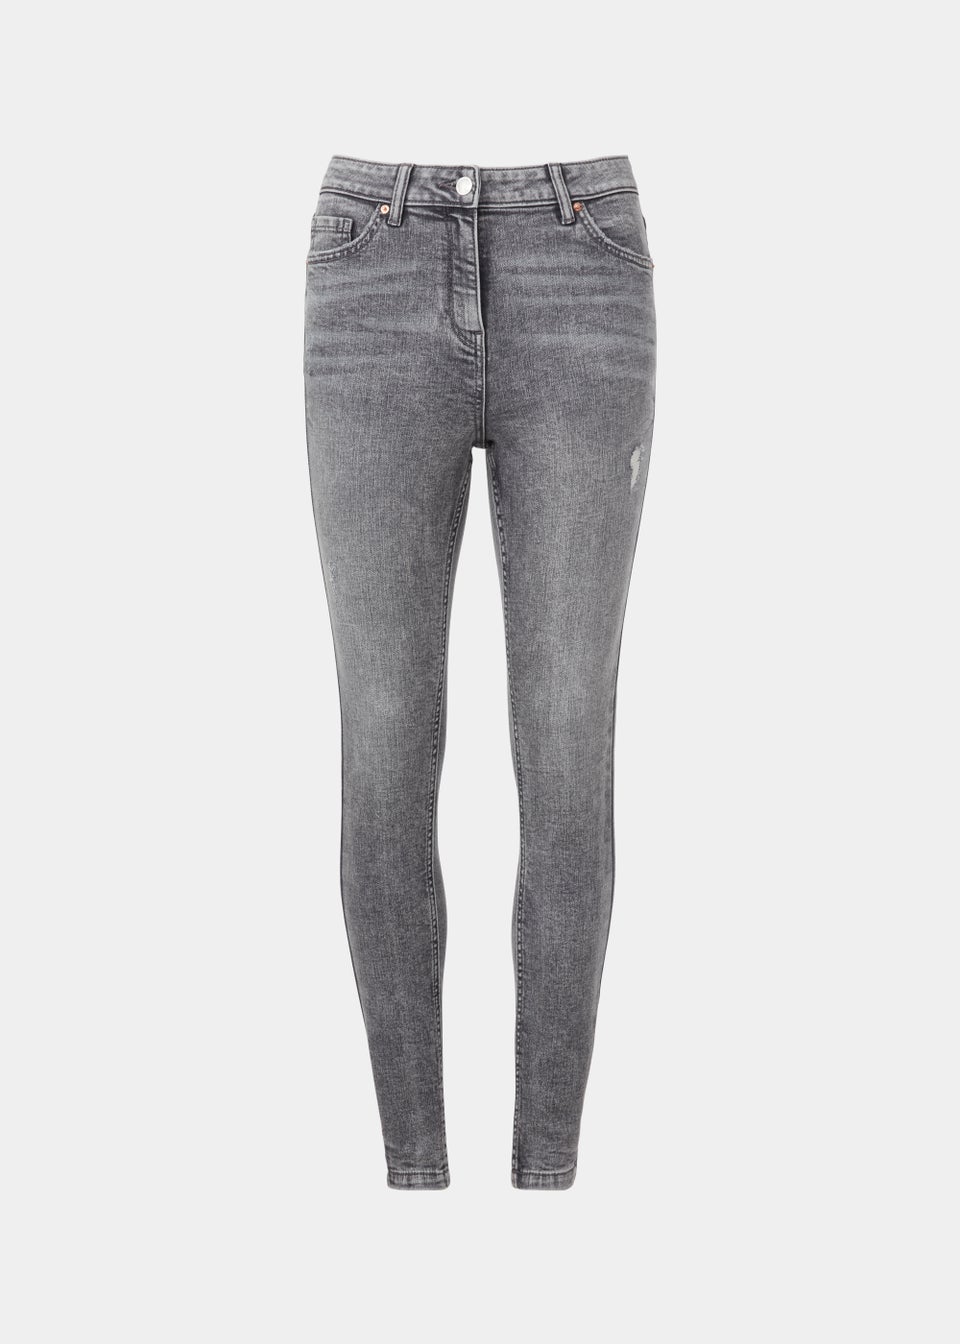 April Grey Ripped Super Skinny Jeans